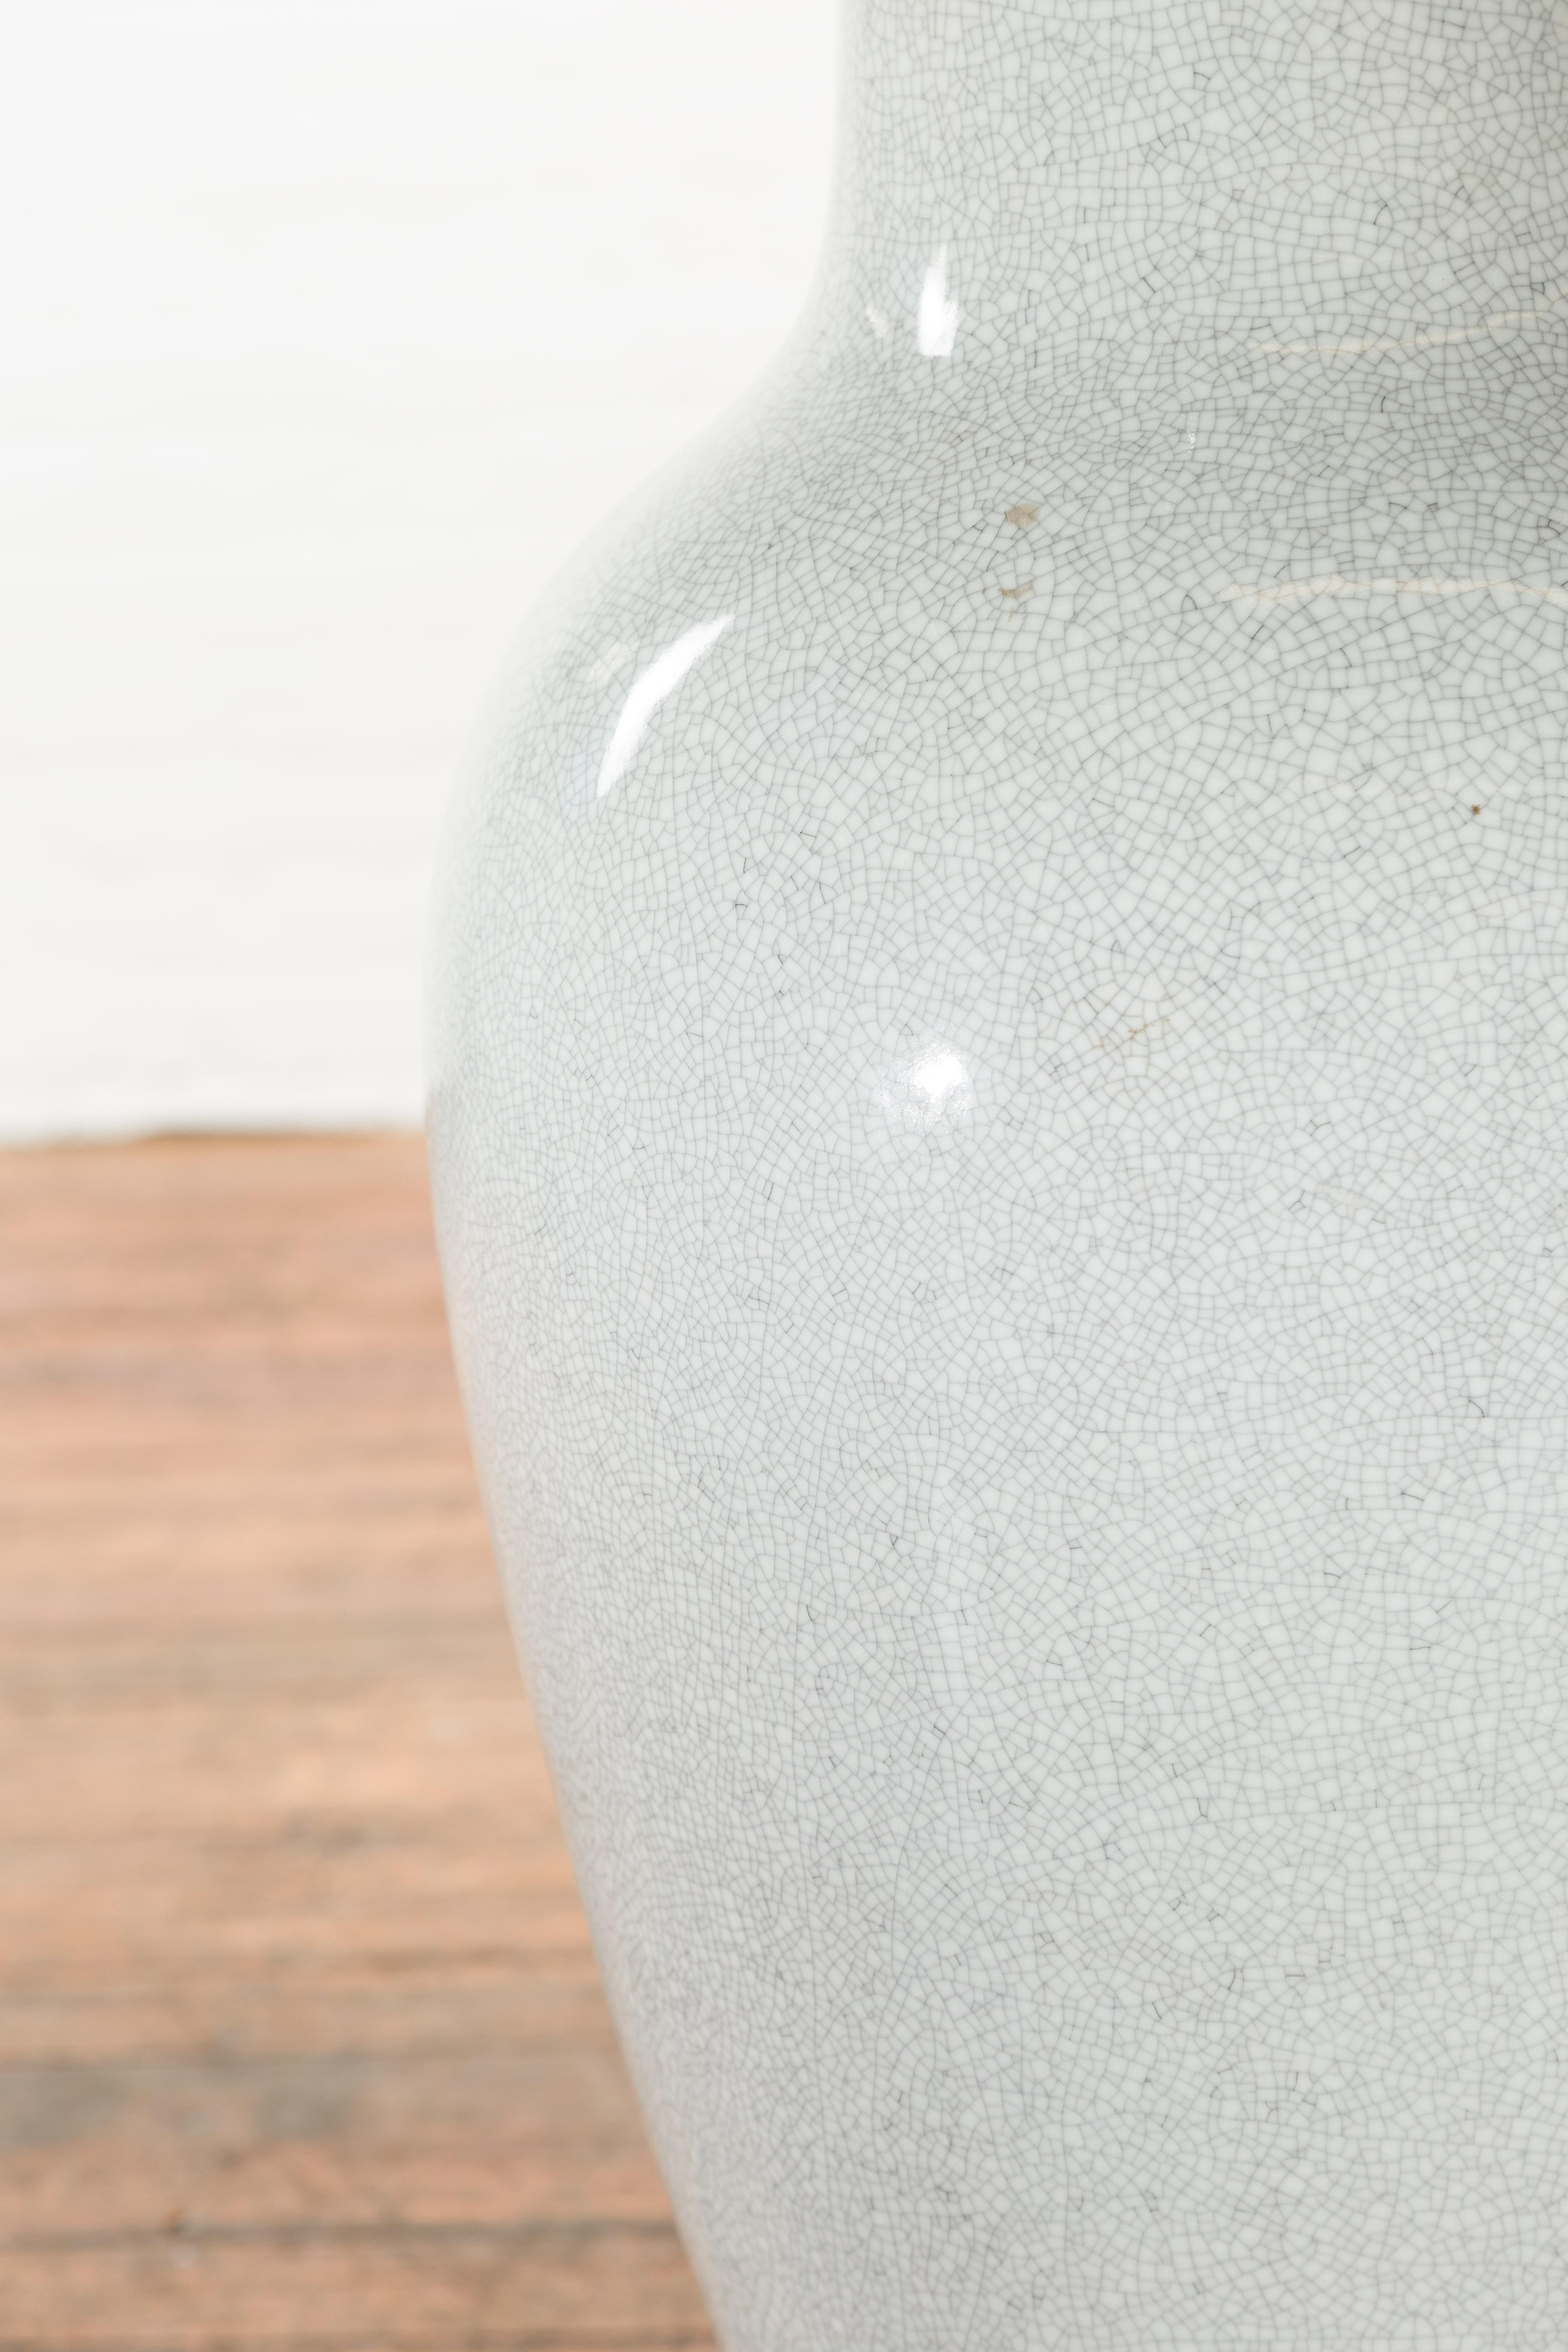 Glazed Large Chinese Vintage Altar Vase with Grey Crackle Finish and Flaring Neck For Sale